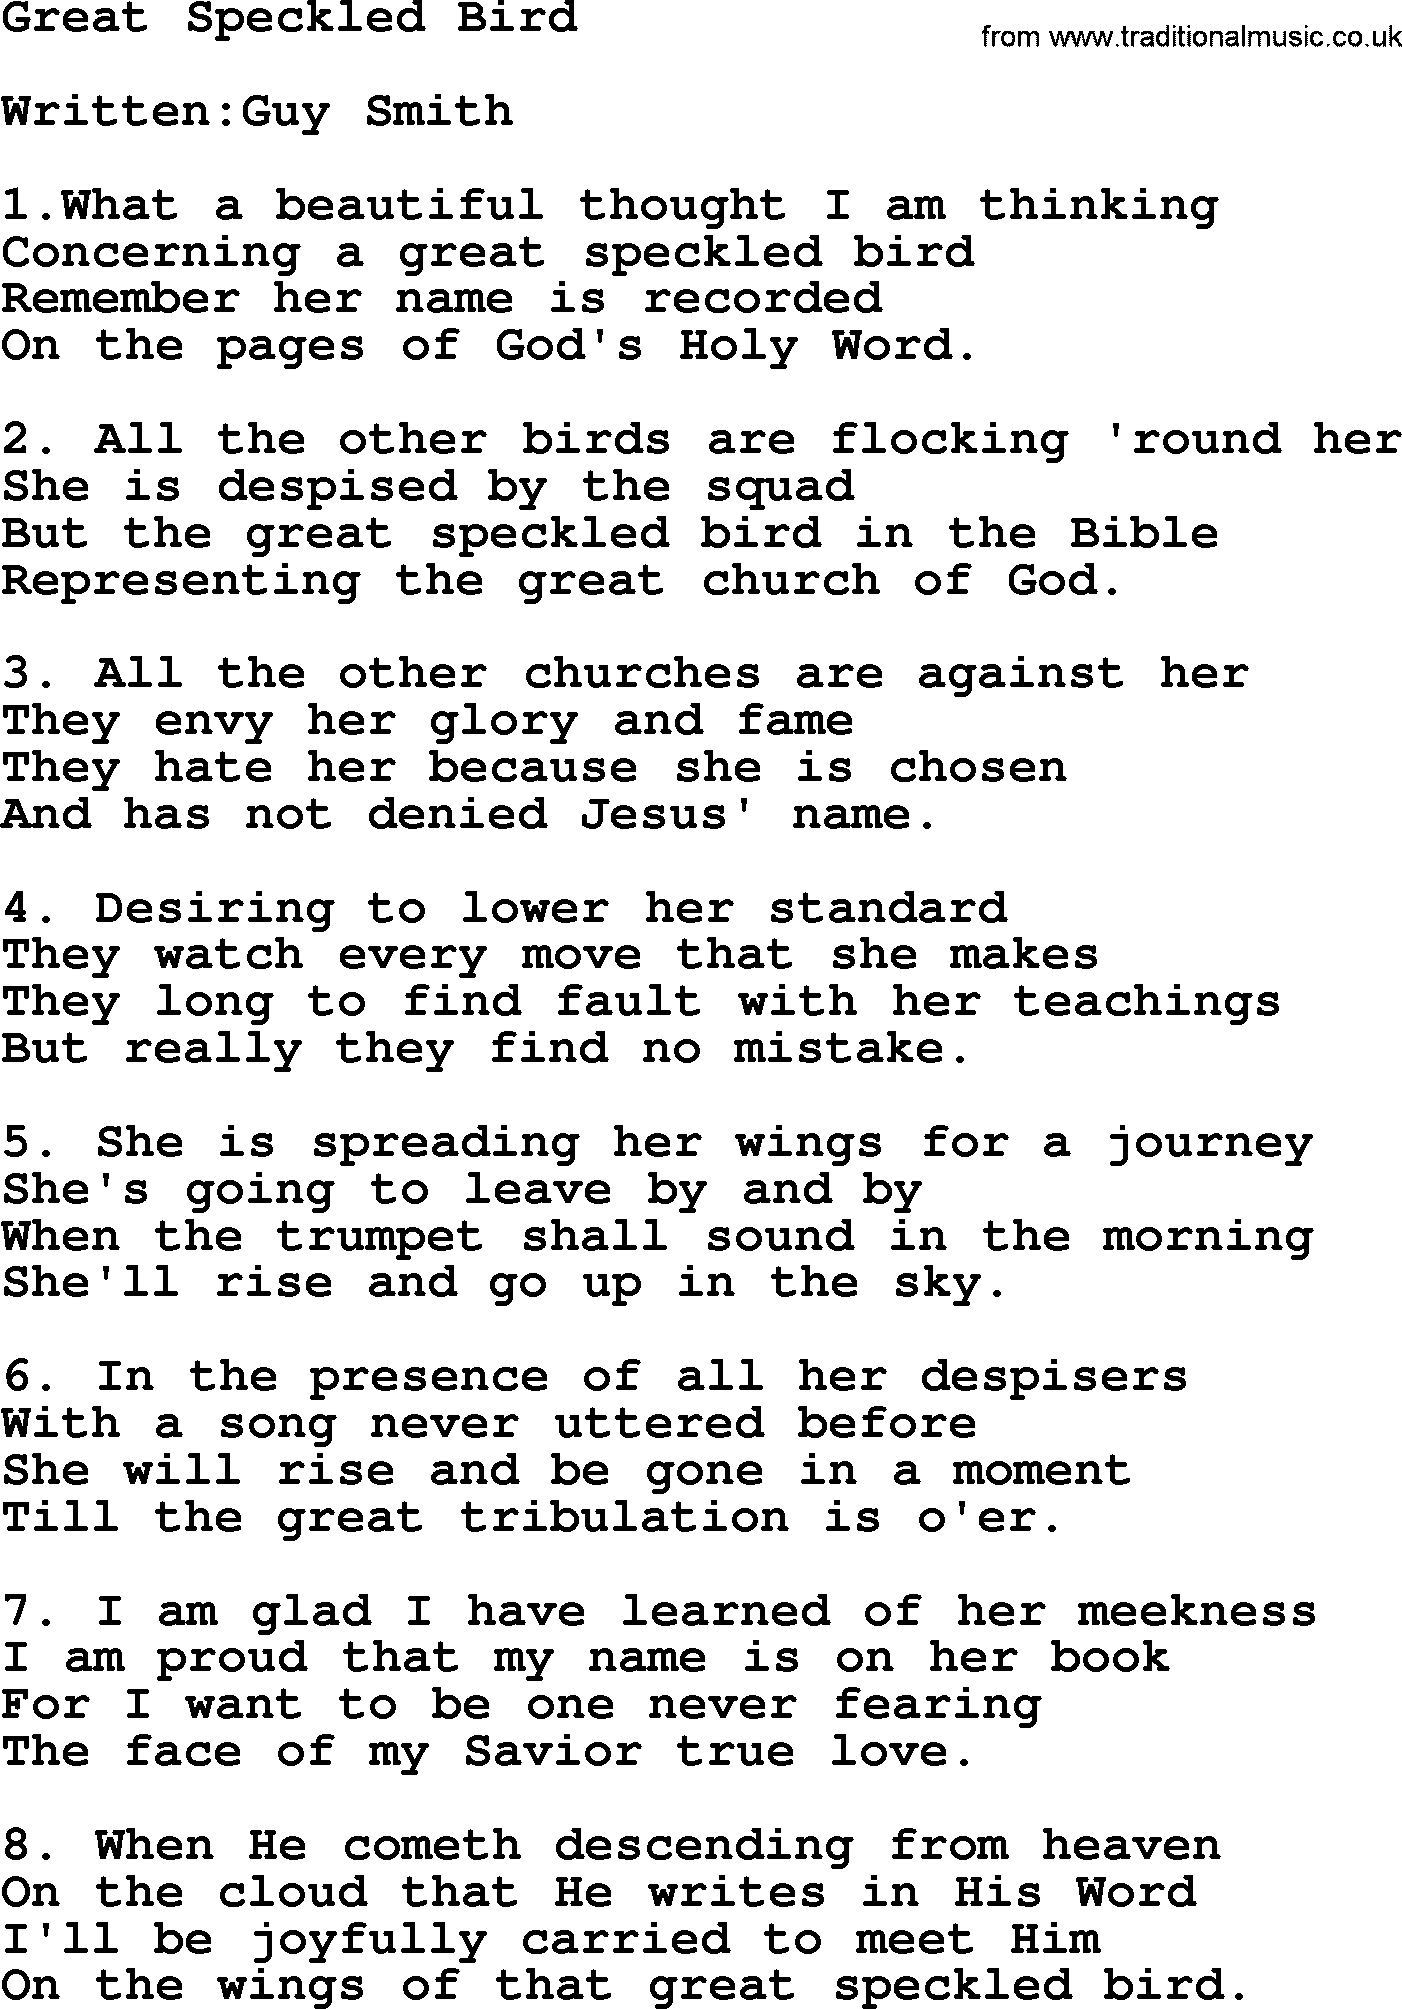 Marty Robbins song: Great Speckled Bird, lyrics